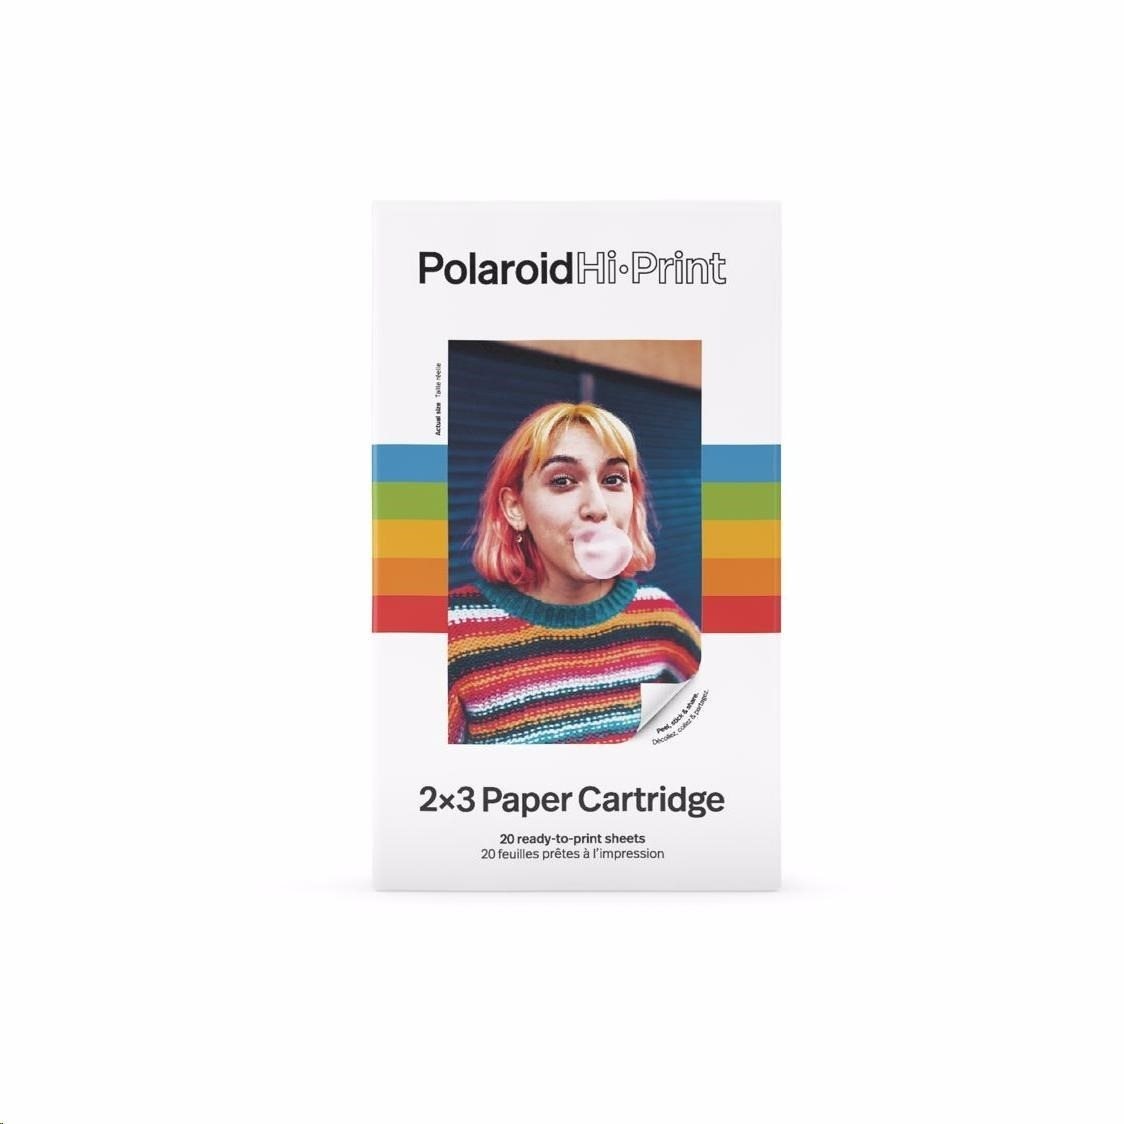 Polaroid HI-PRINT cartridge 2X3